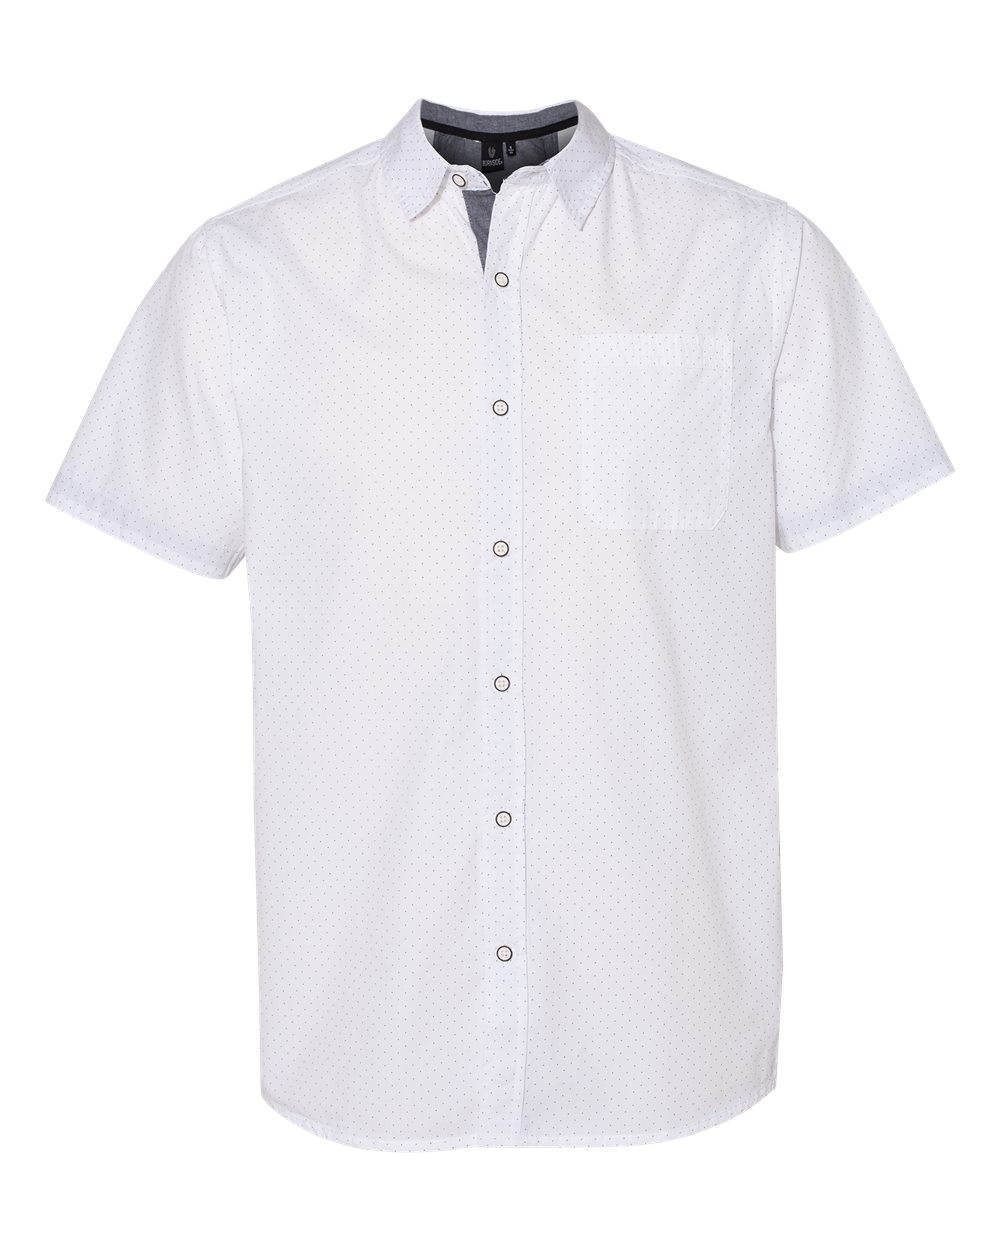 Burnside 9290 - Men's Peached Poplin Short Sleeve Woven Shirt